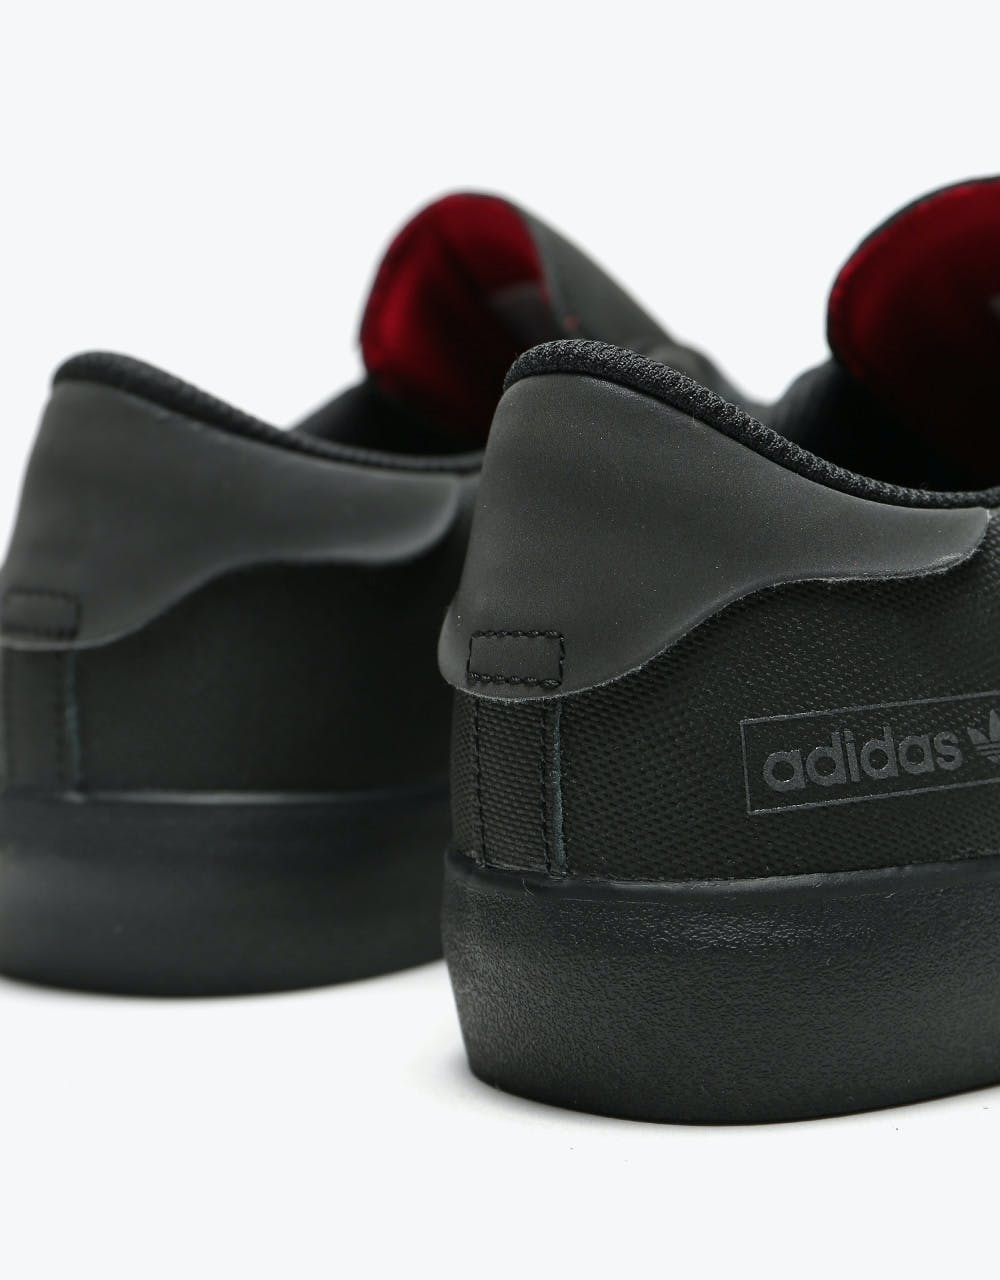 Adidas Matchbreak Super Skate Shoes - Core Black/Core Black/Core Black